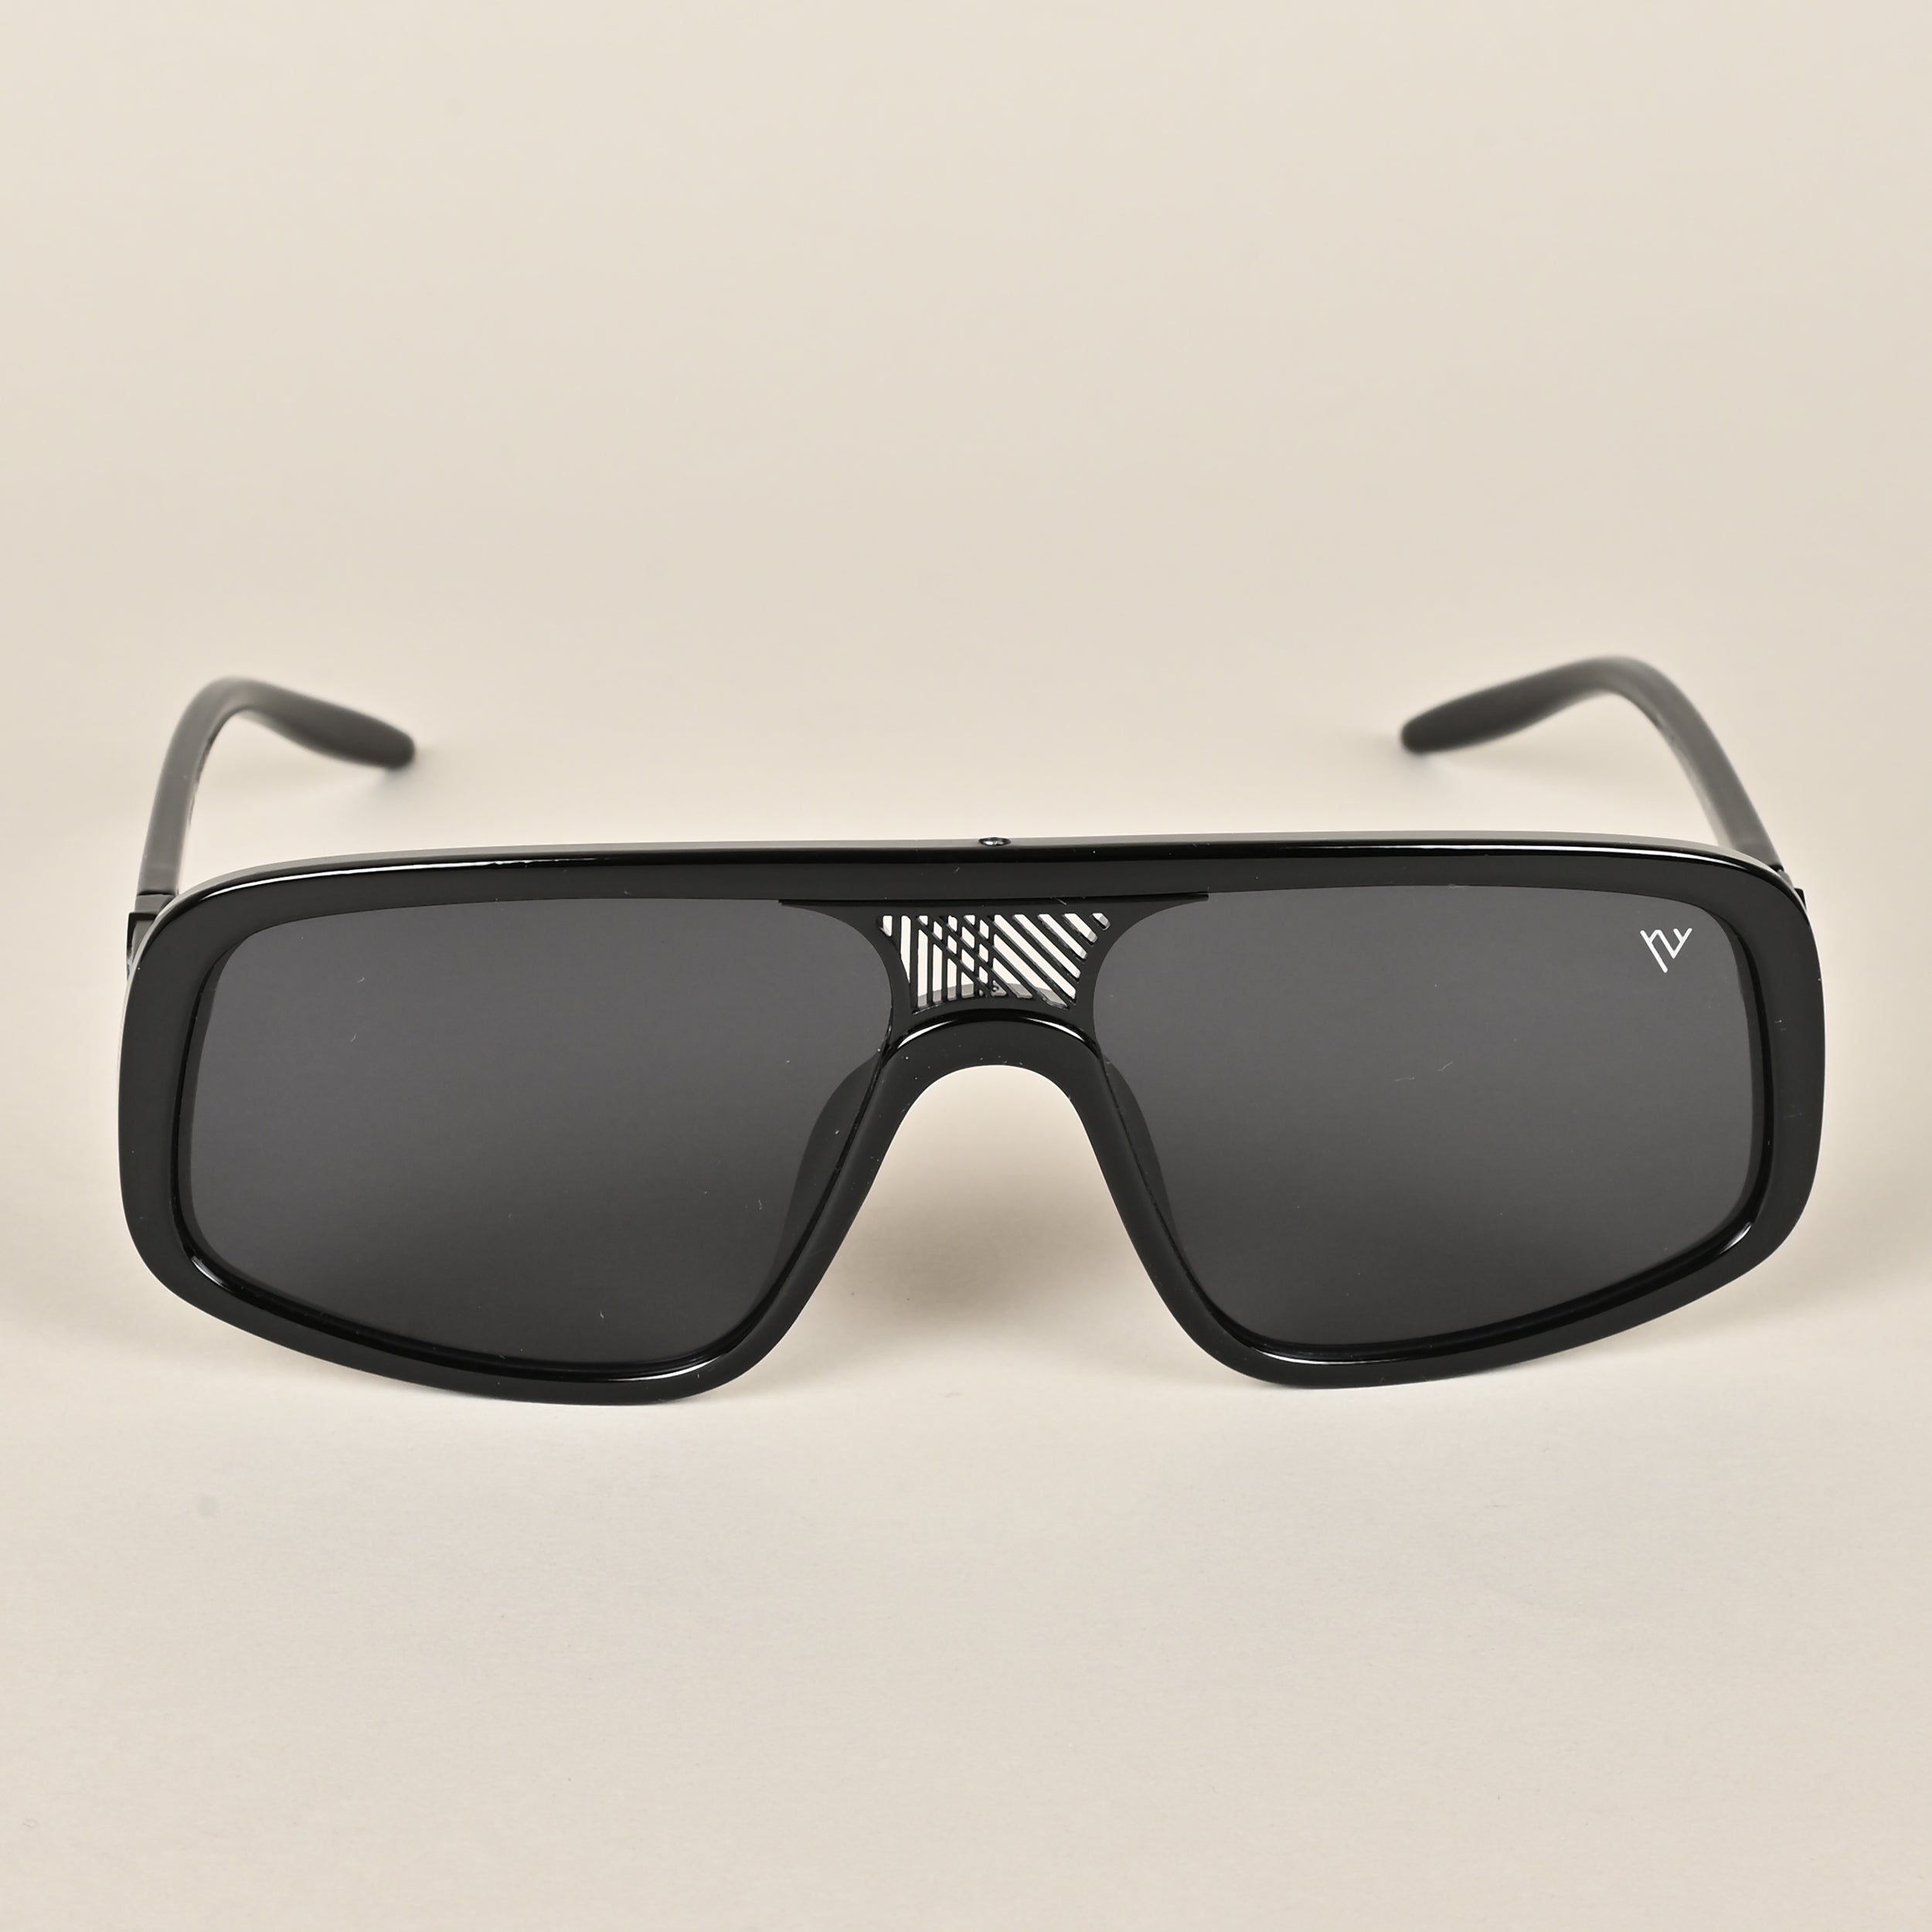 Voyage Black Wayfarer Sunglasses for Men & Women (2846MG4018)